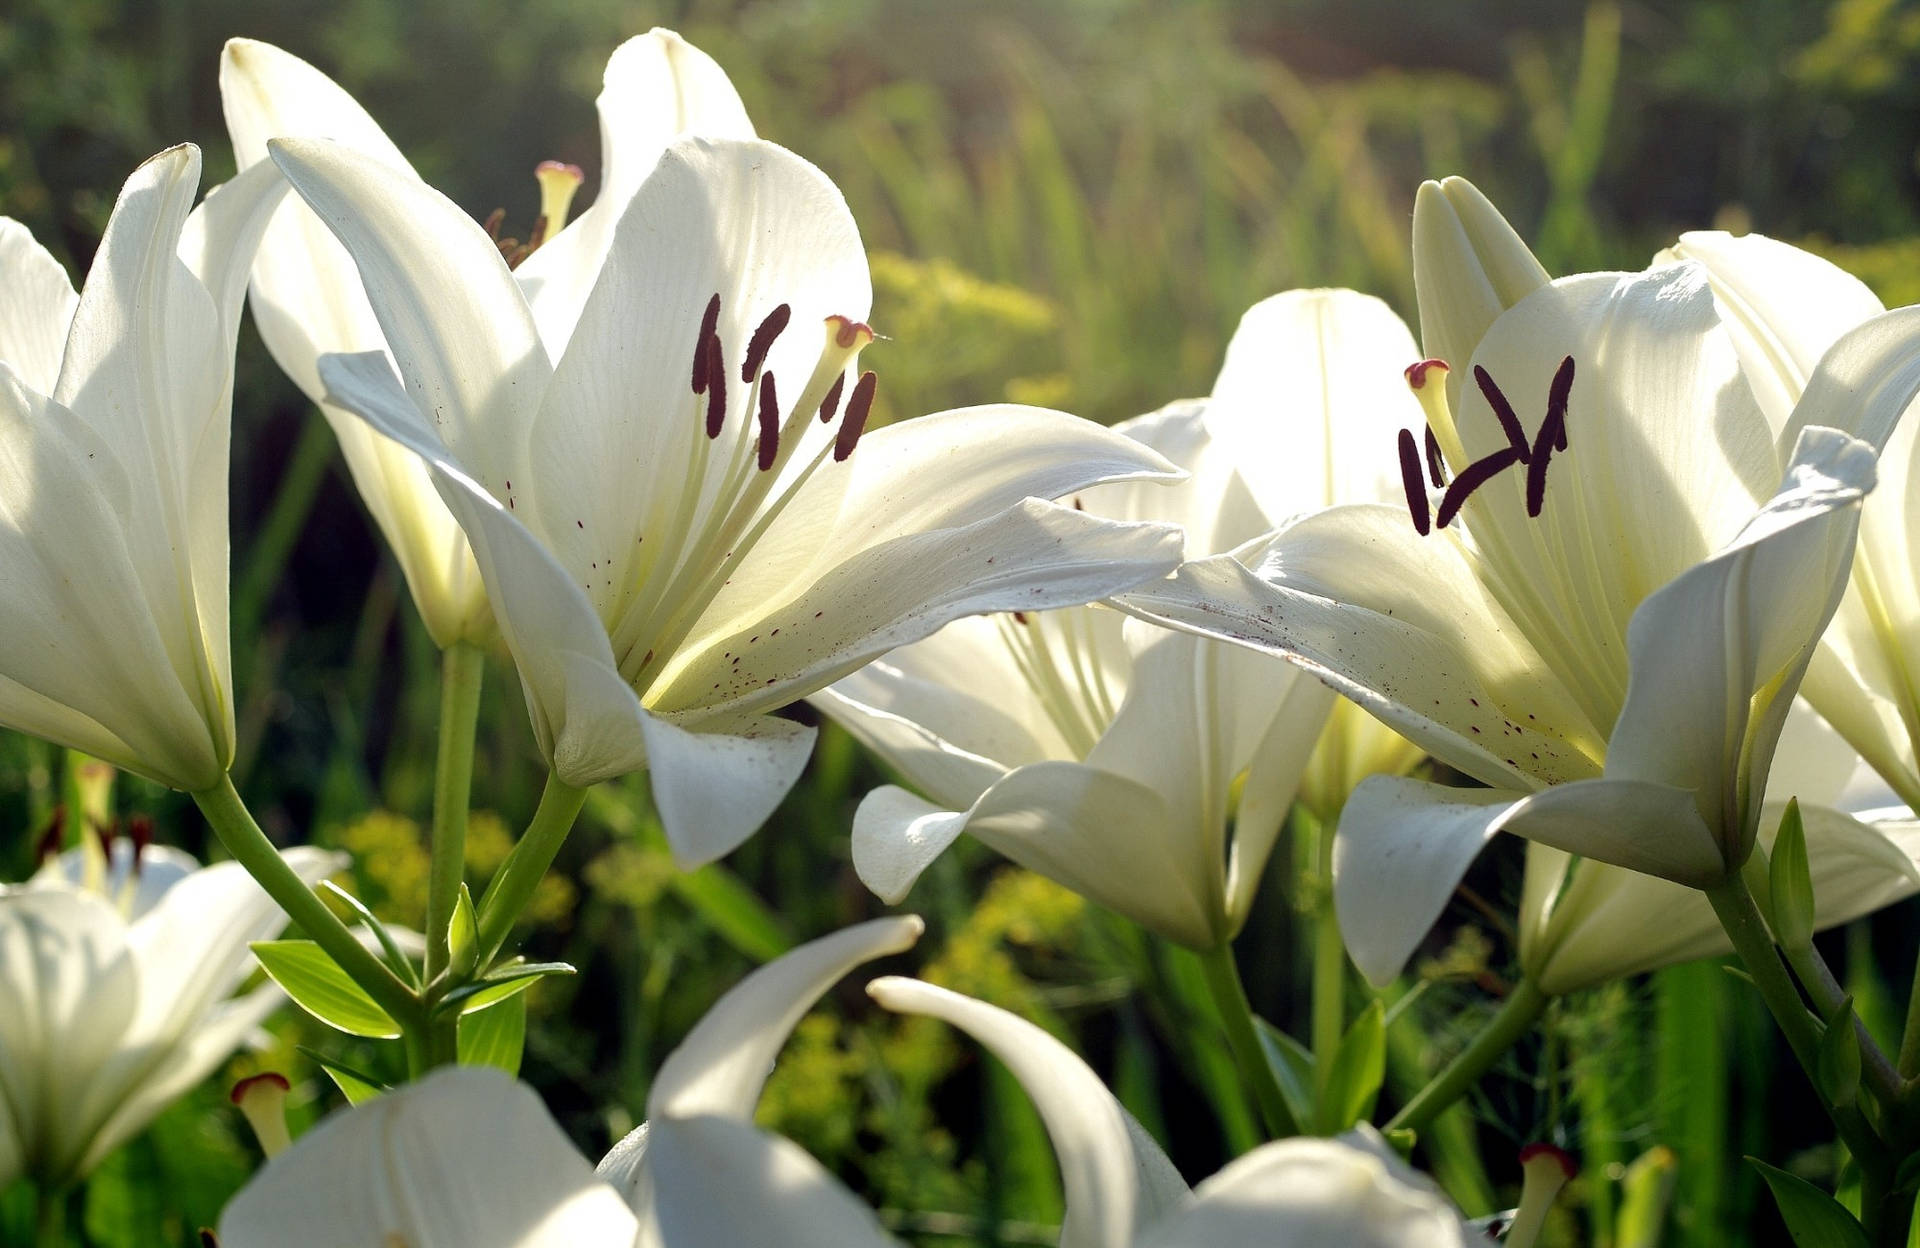 Caption: Elegant White Lily In Full Bloom Background